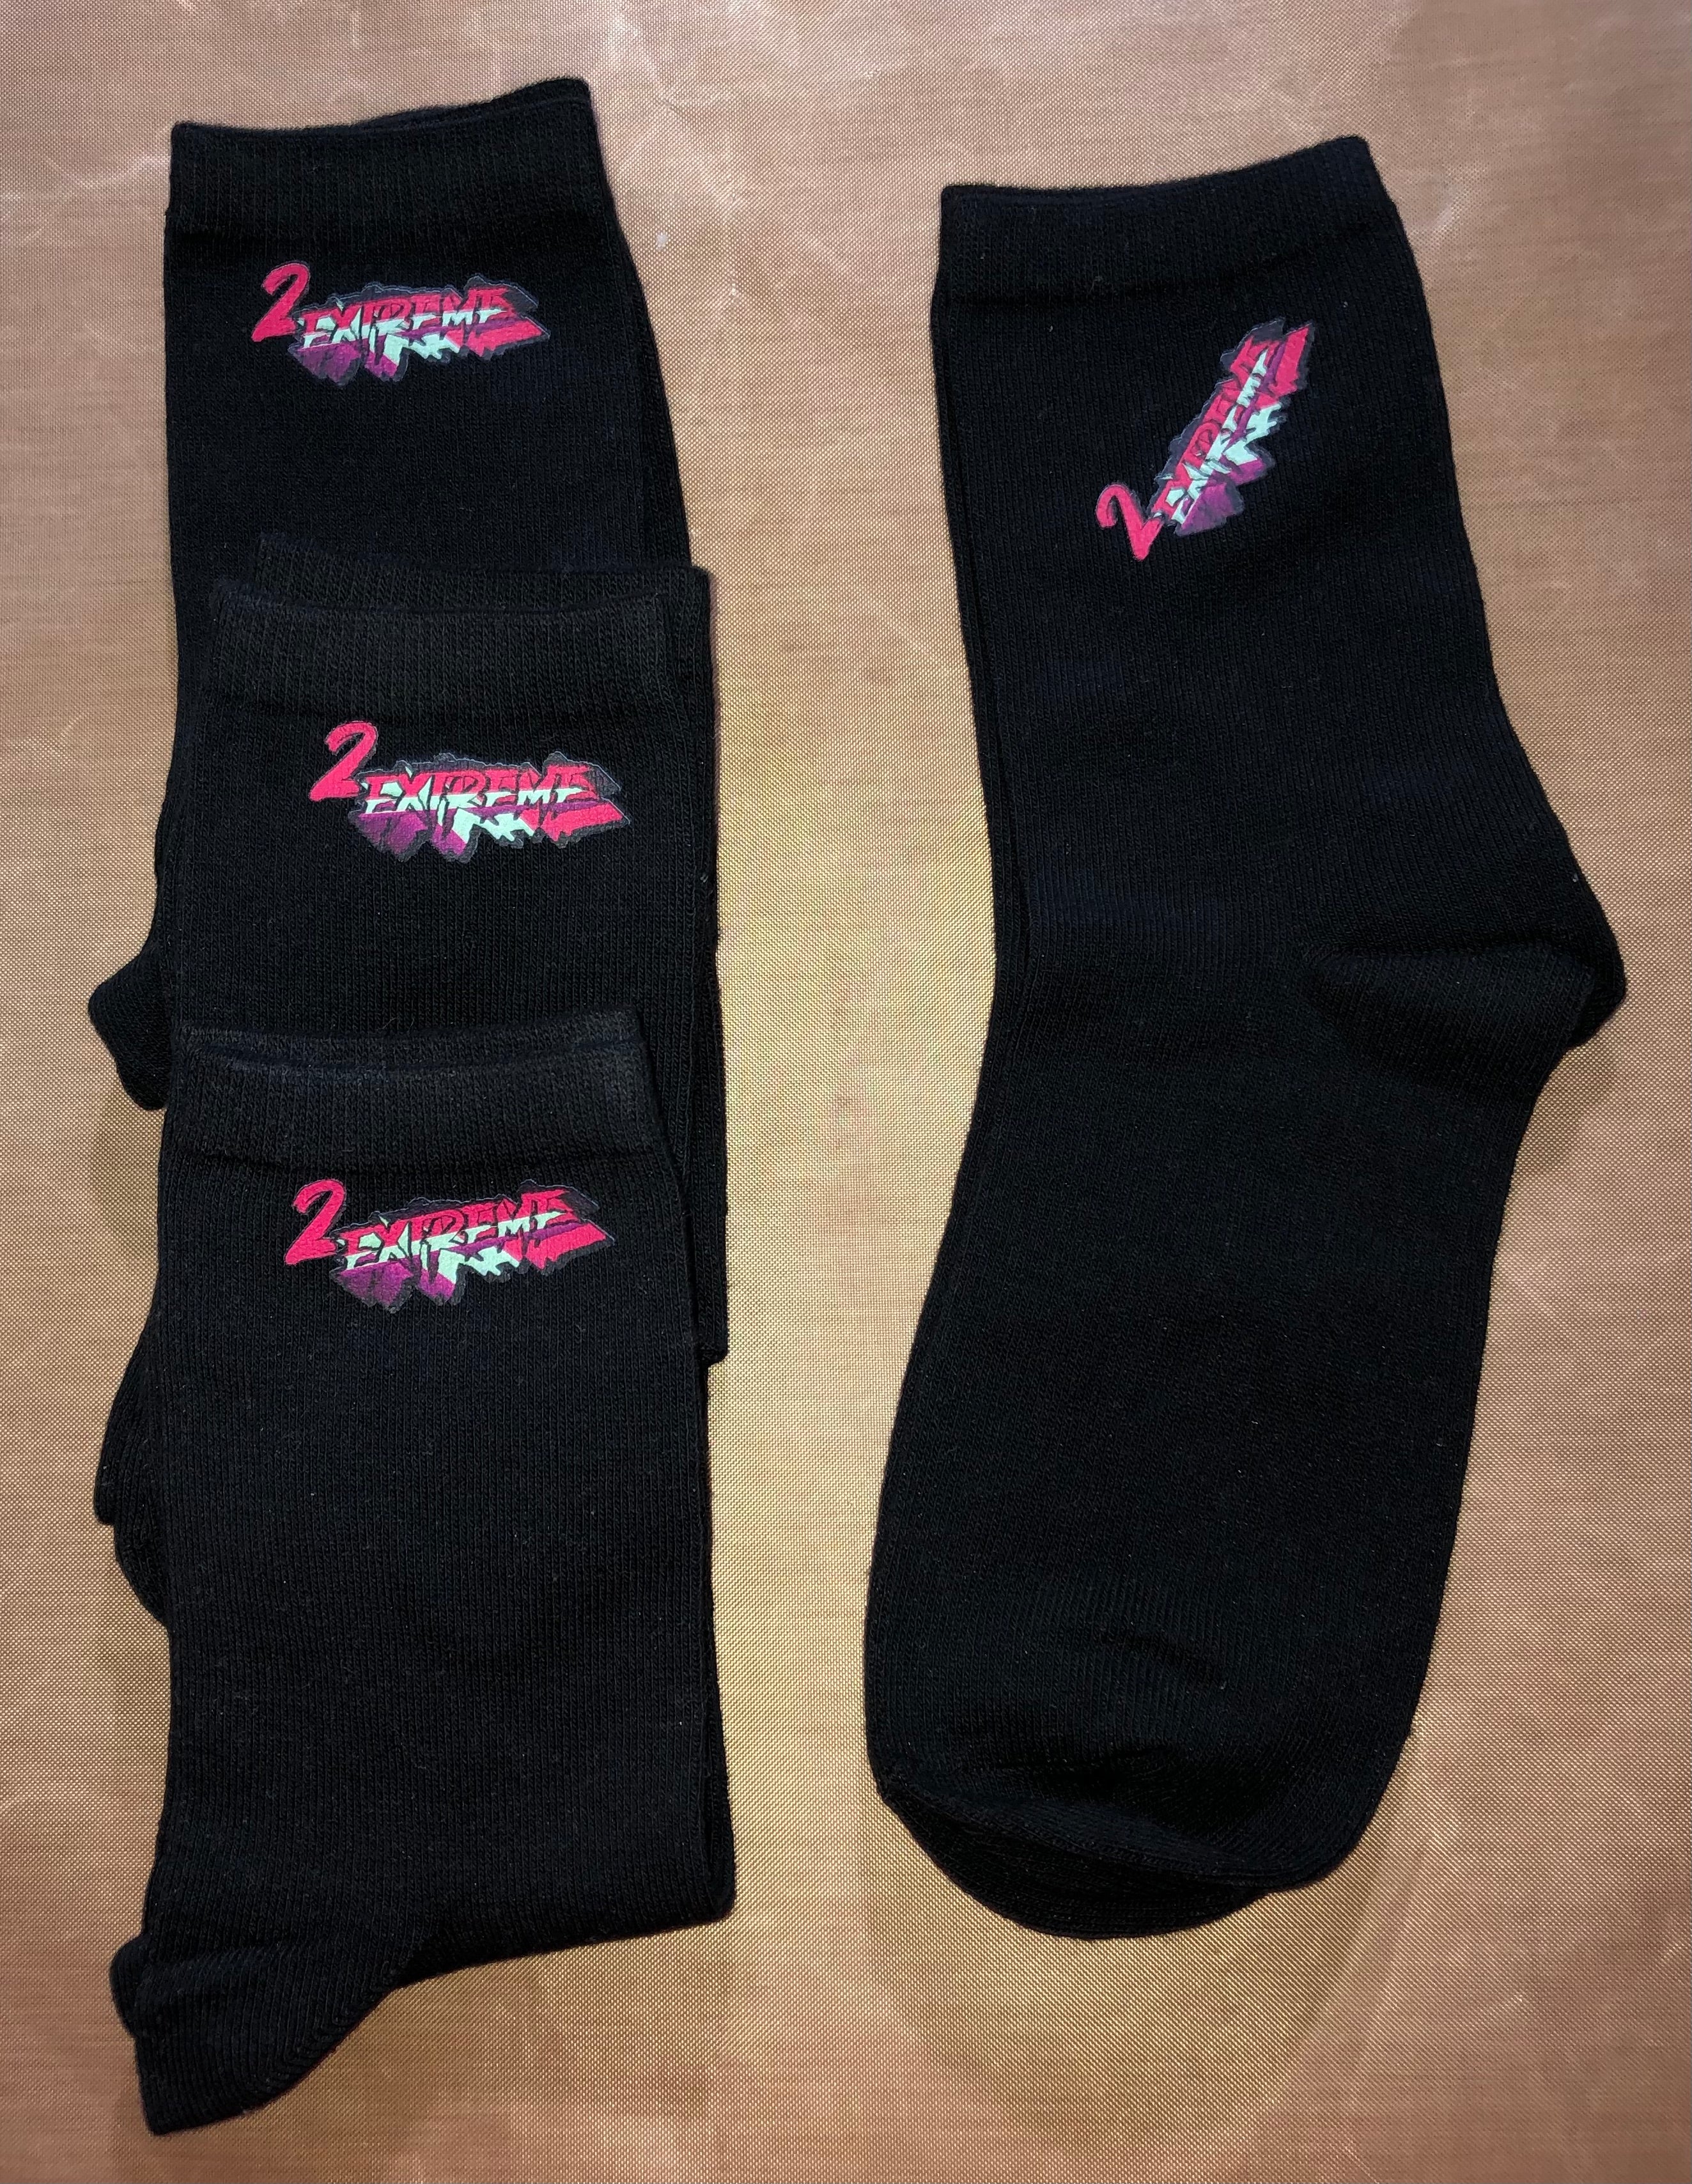 2Extreme-Black Socks